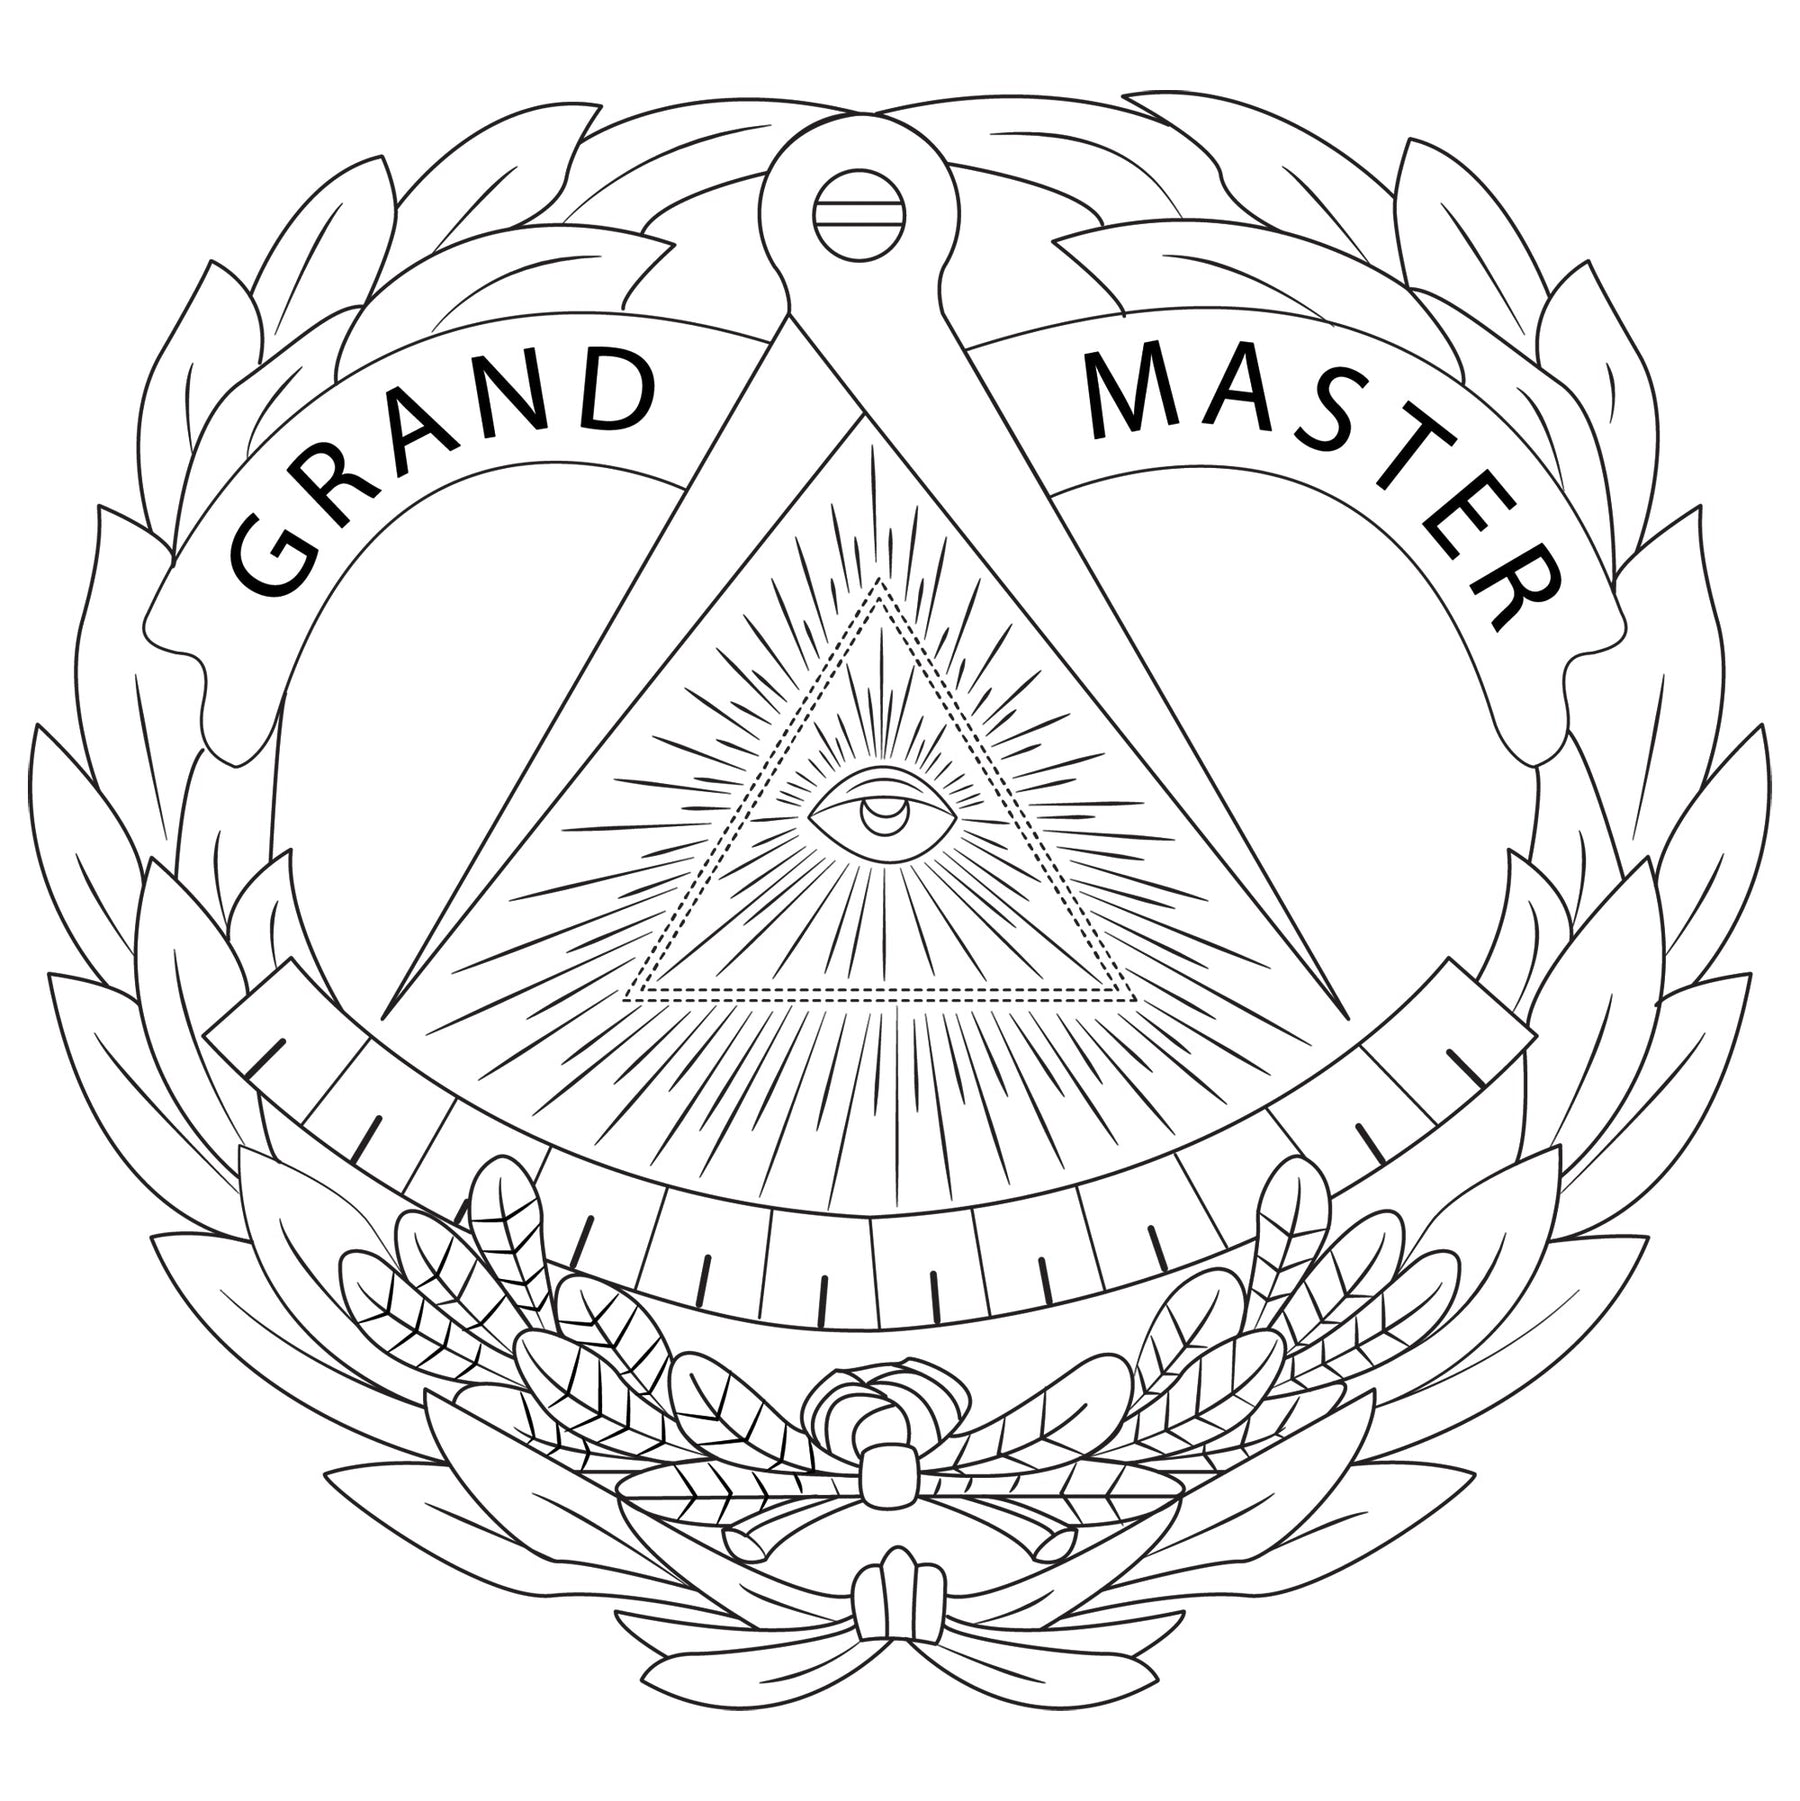 Grand Master Blue Lodge Pen - Multiple Colors - Bricks Masons